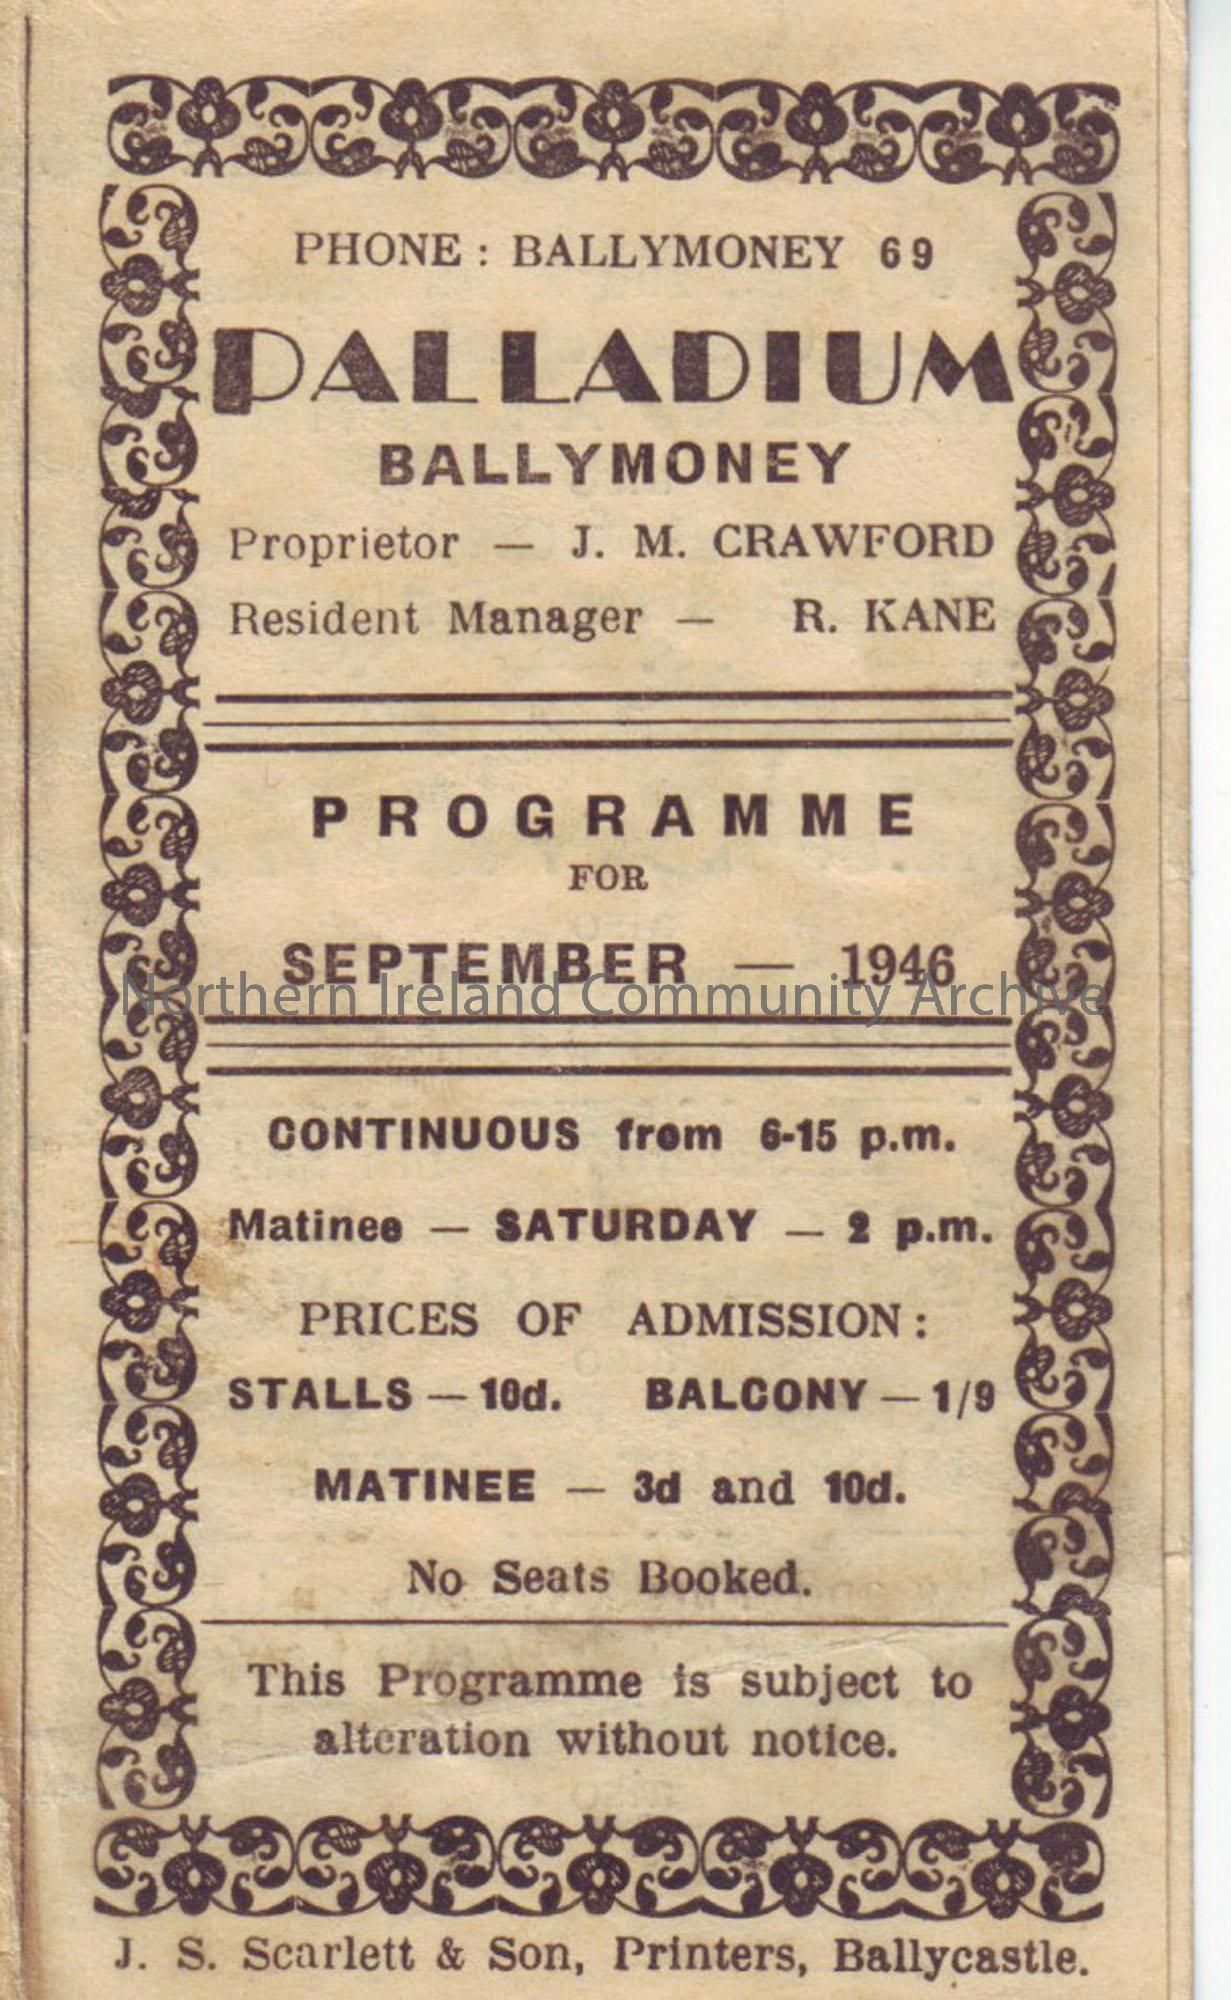 cream programme for Ballymoney Palladium cinema- September 1946